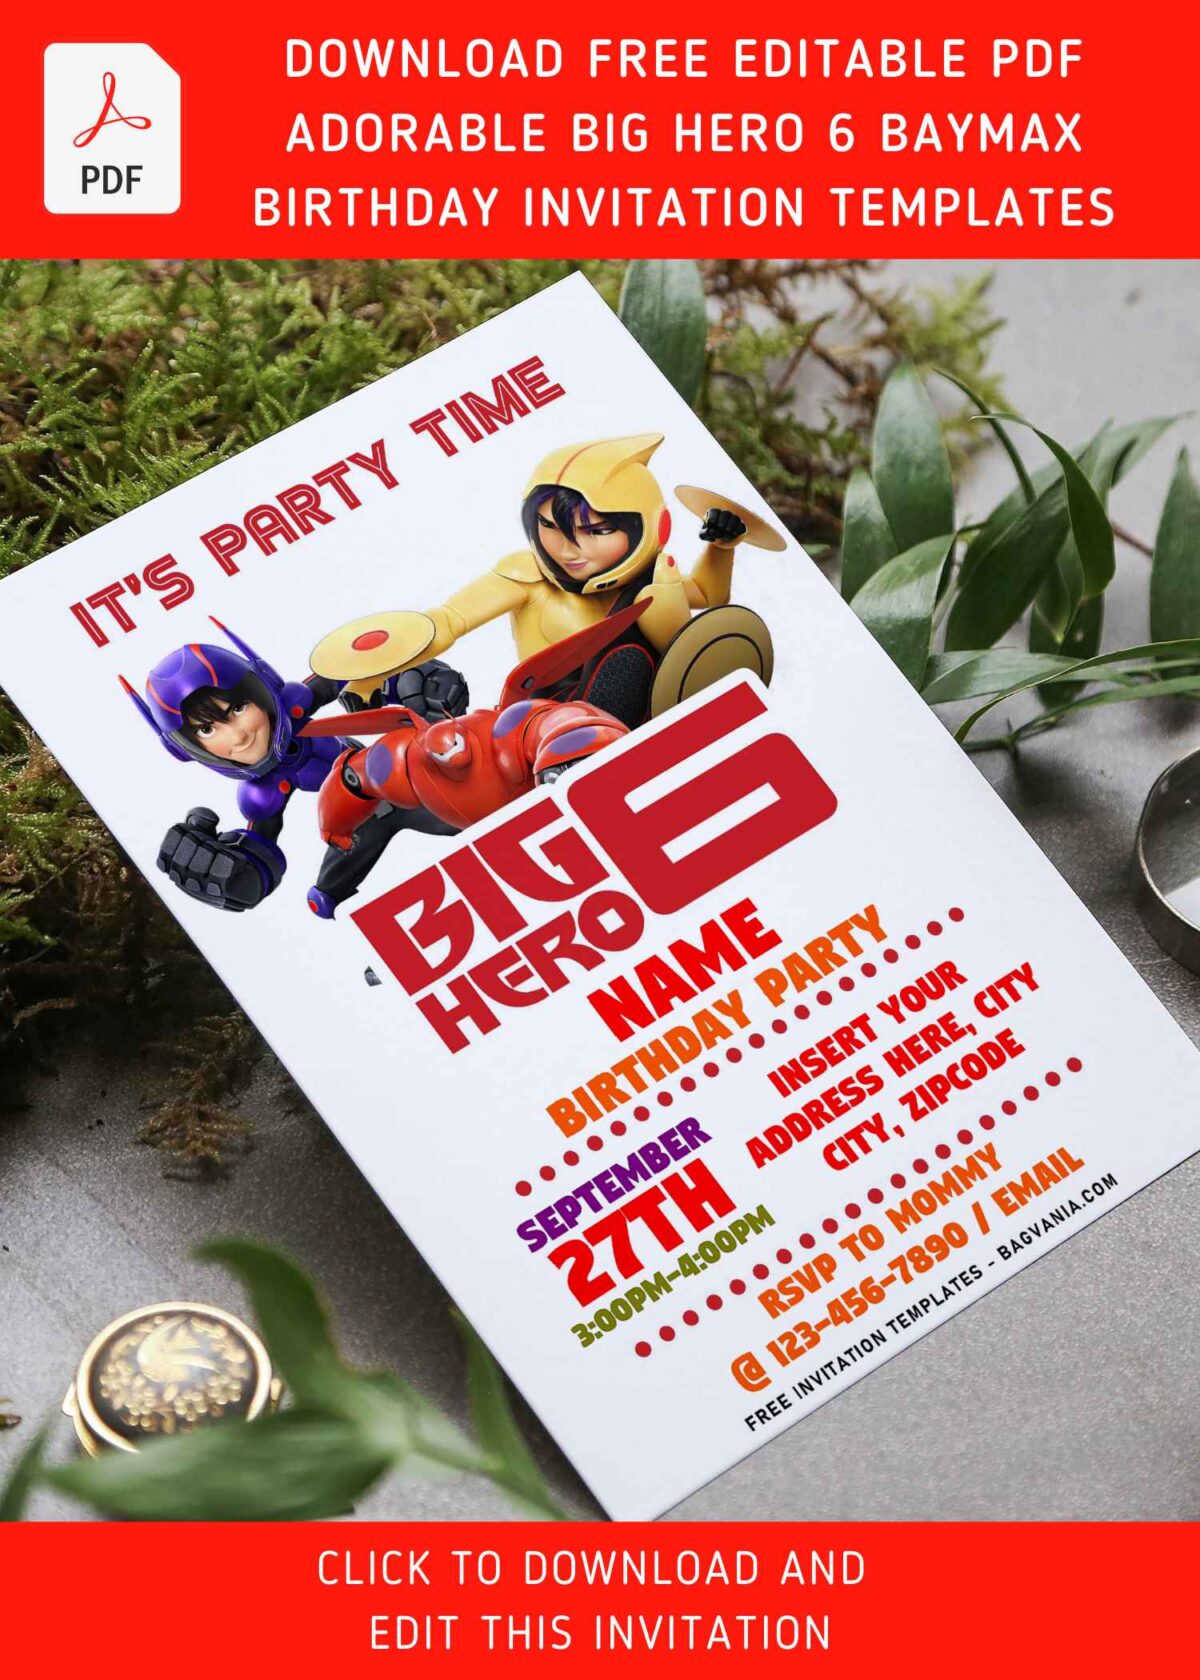 (Free Editable PDF) Adorable Big Hero 6 Baymax Birthday Invitation Templates with portrait orientation design